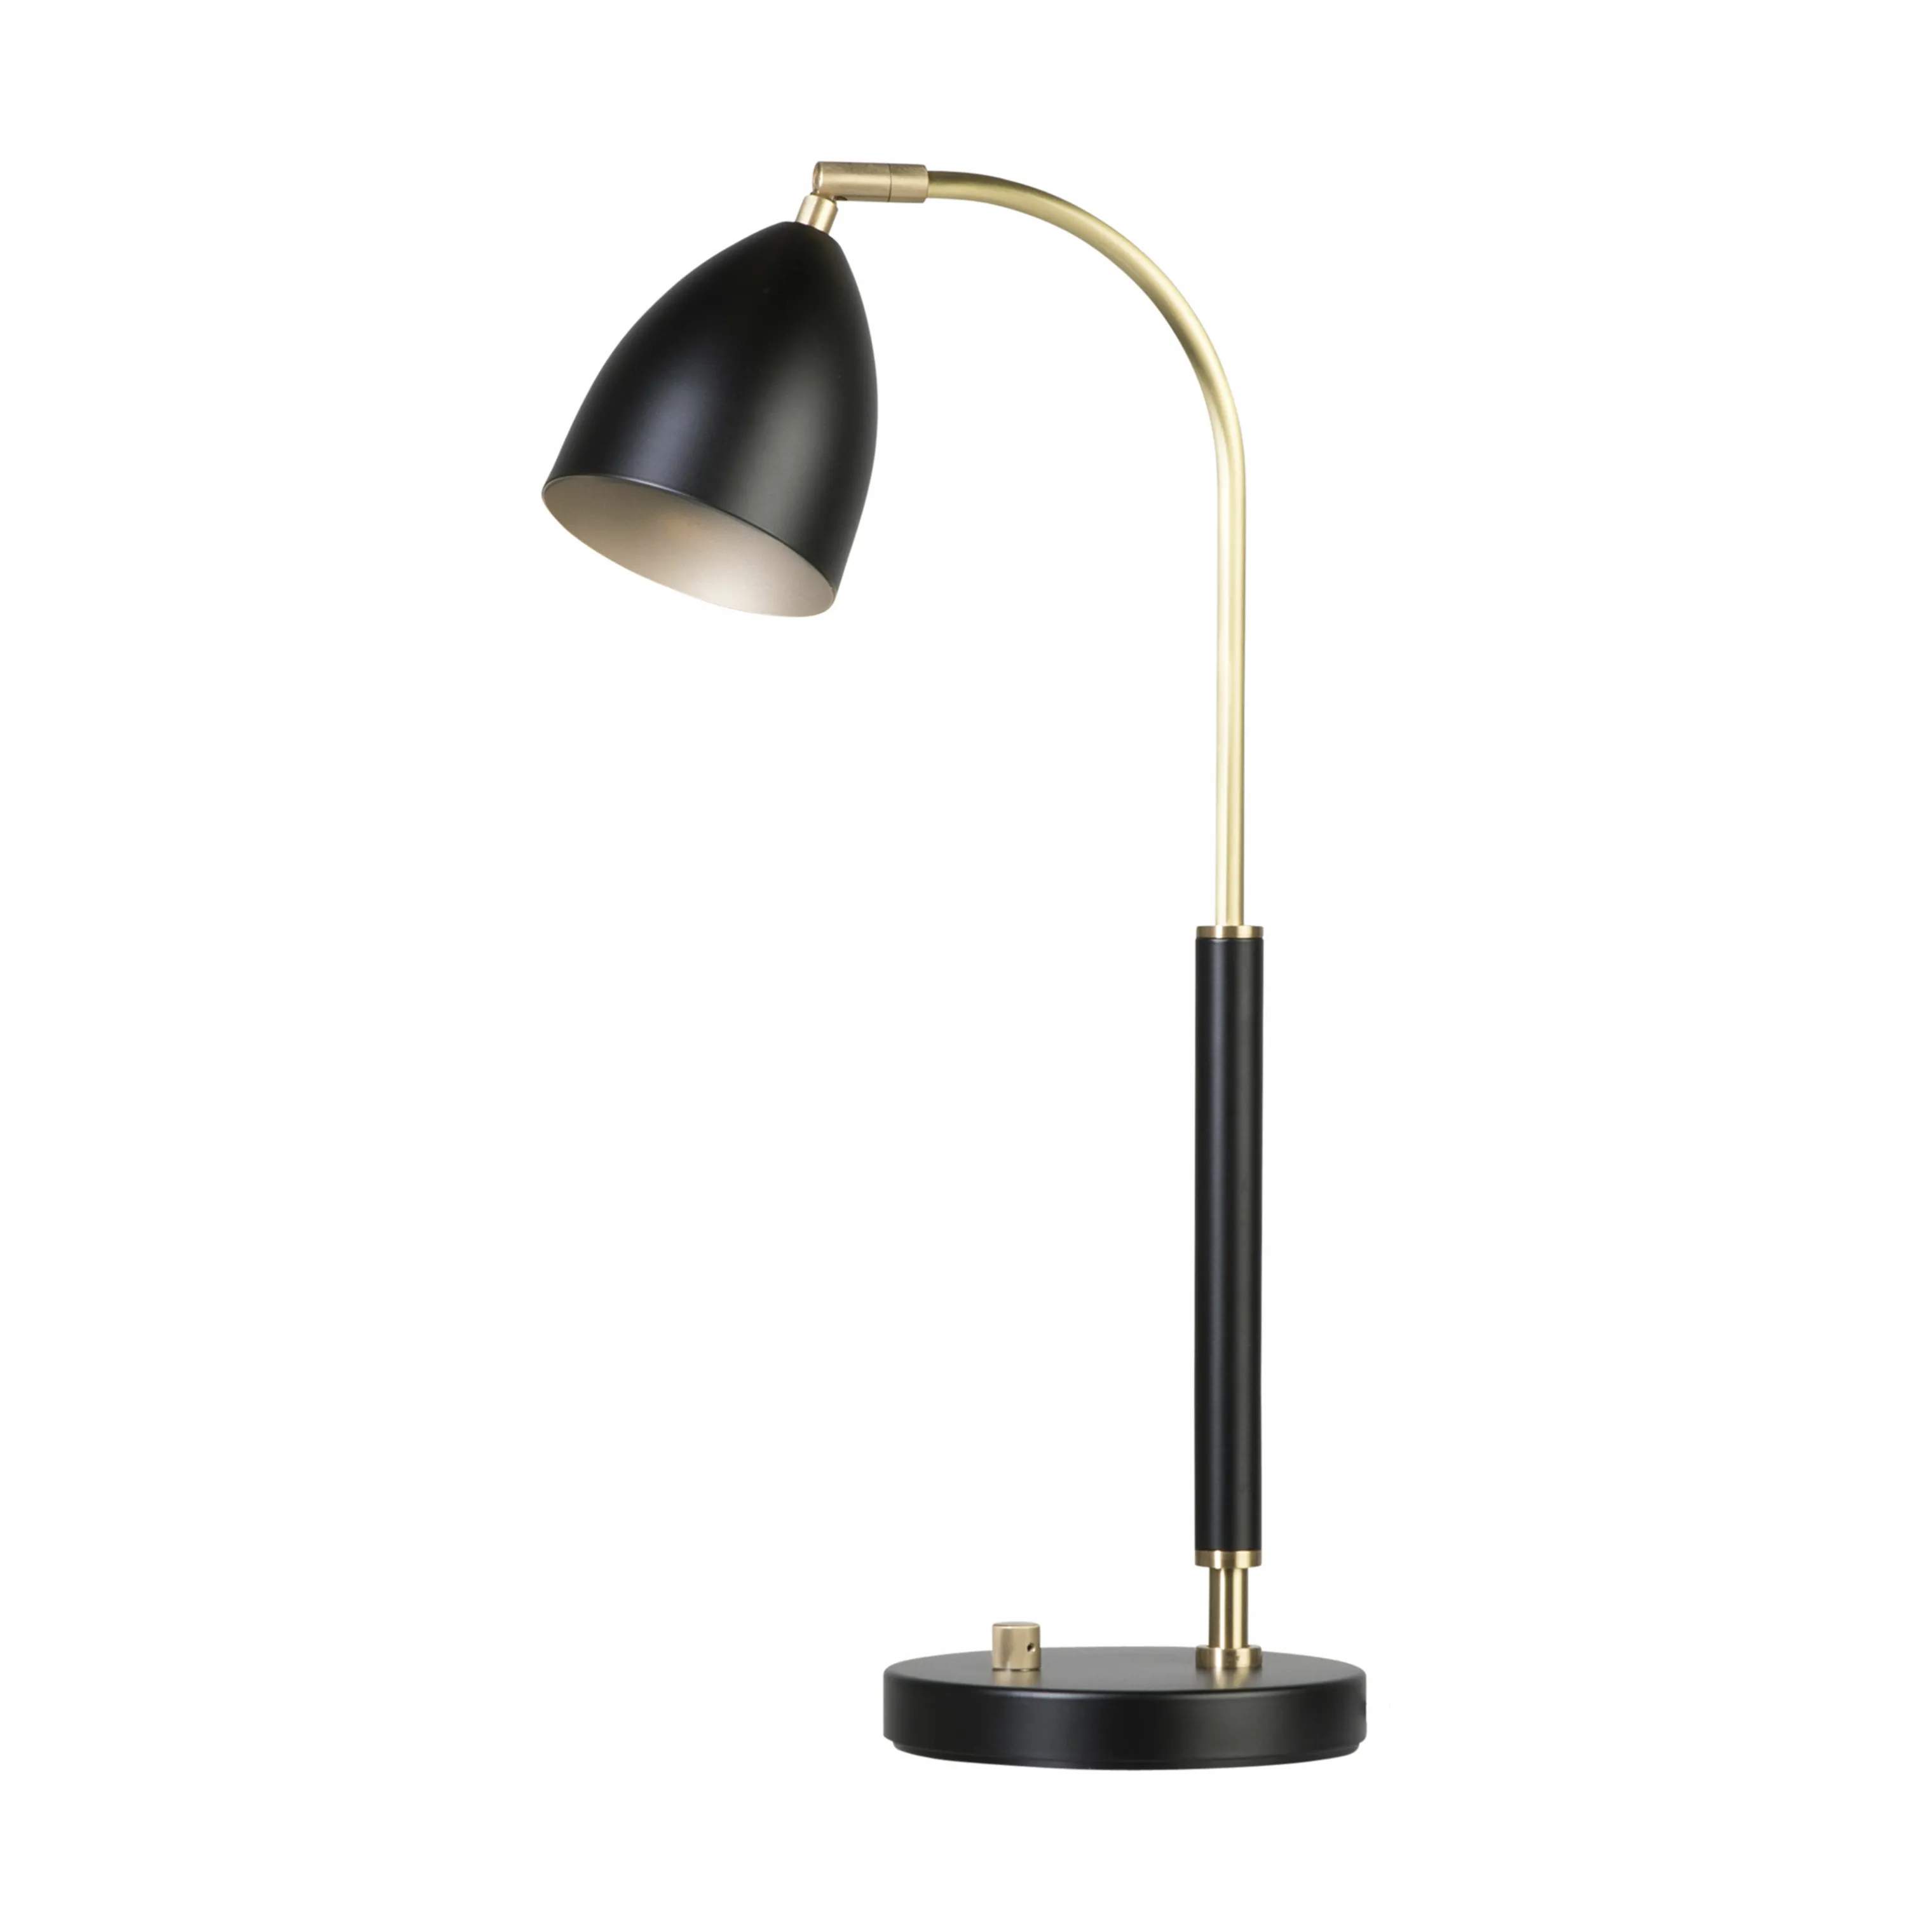 Deluxe Bordlampe, black, large